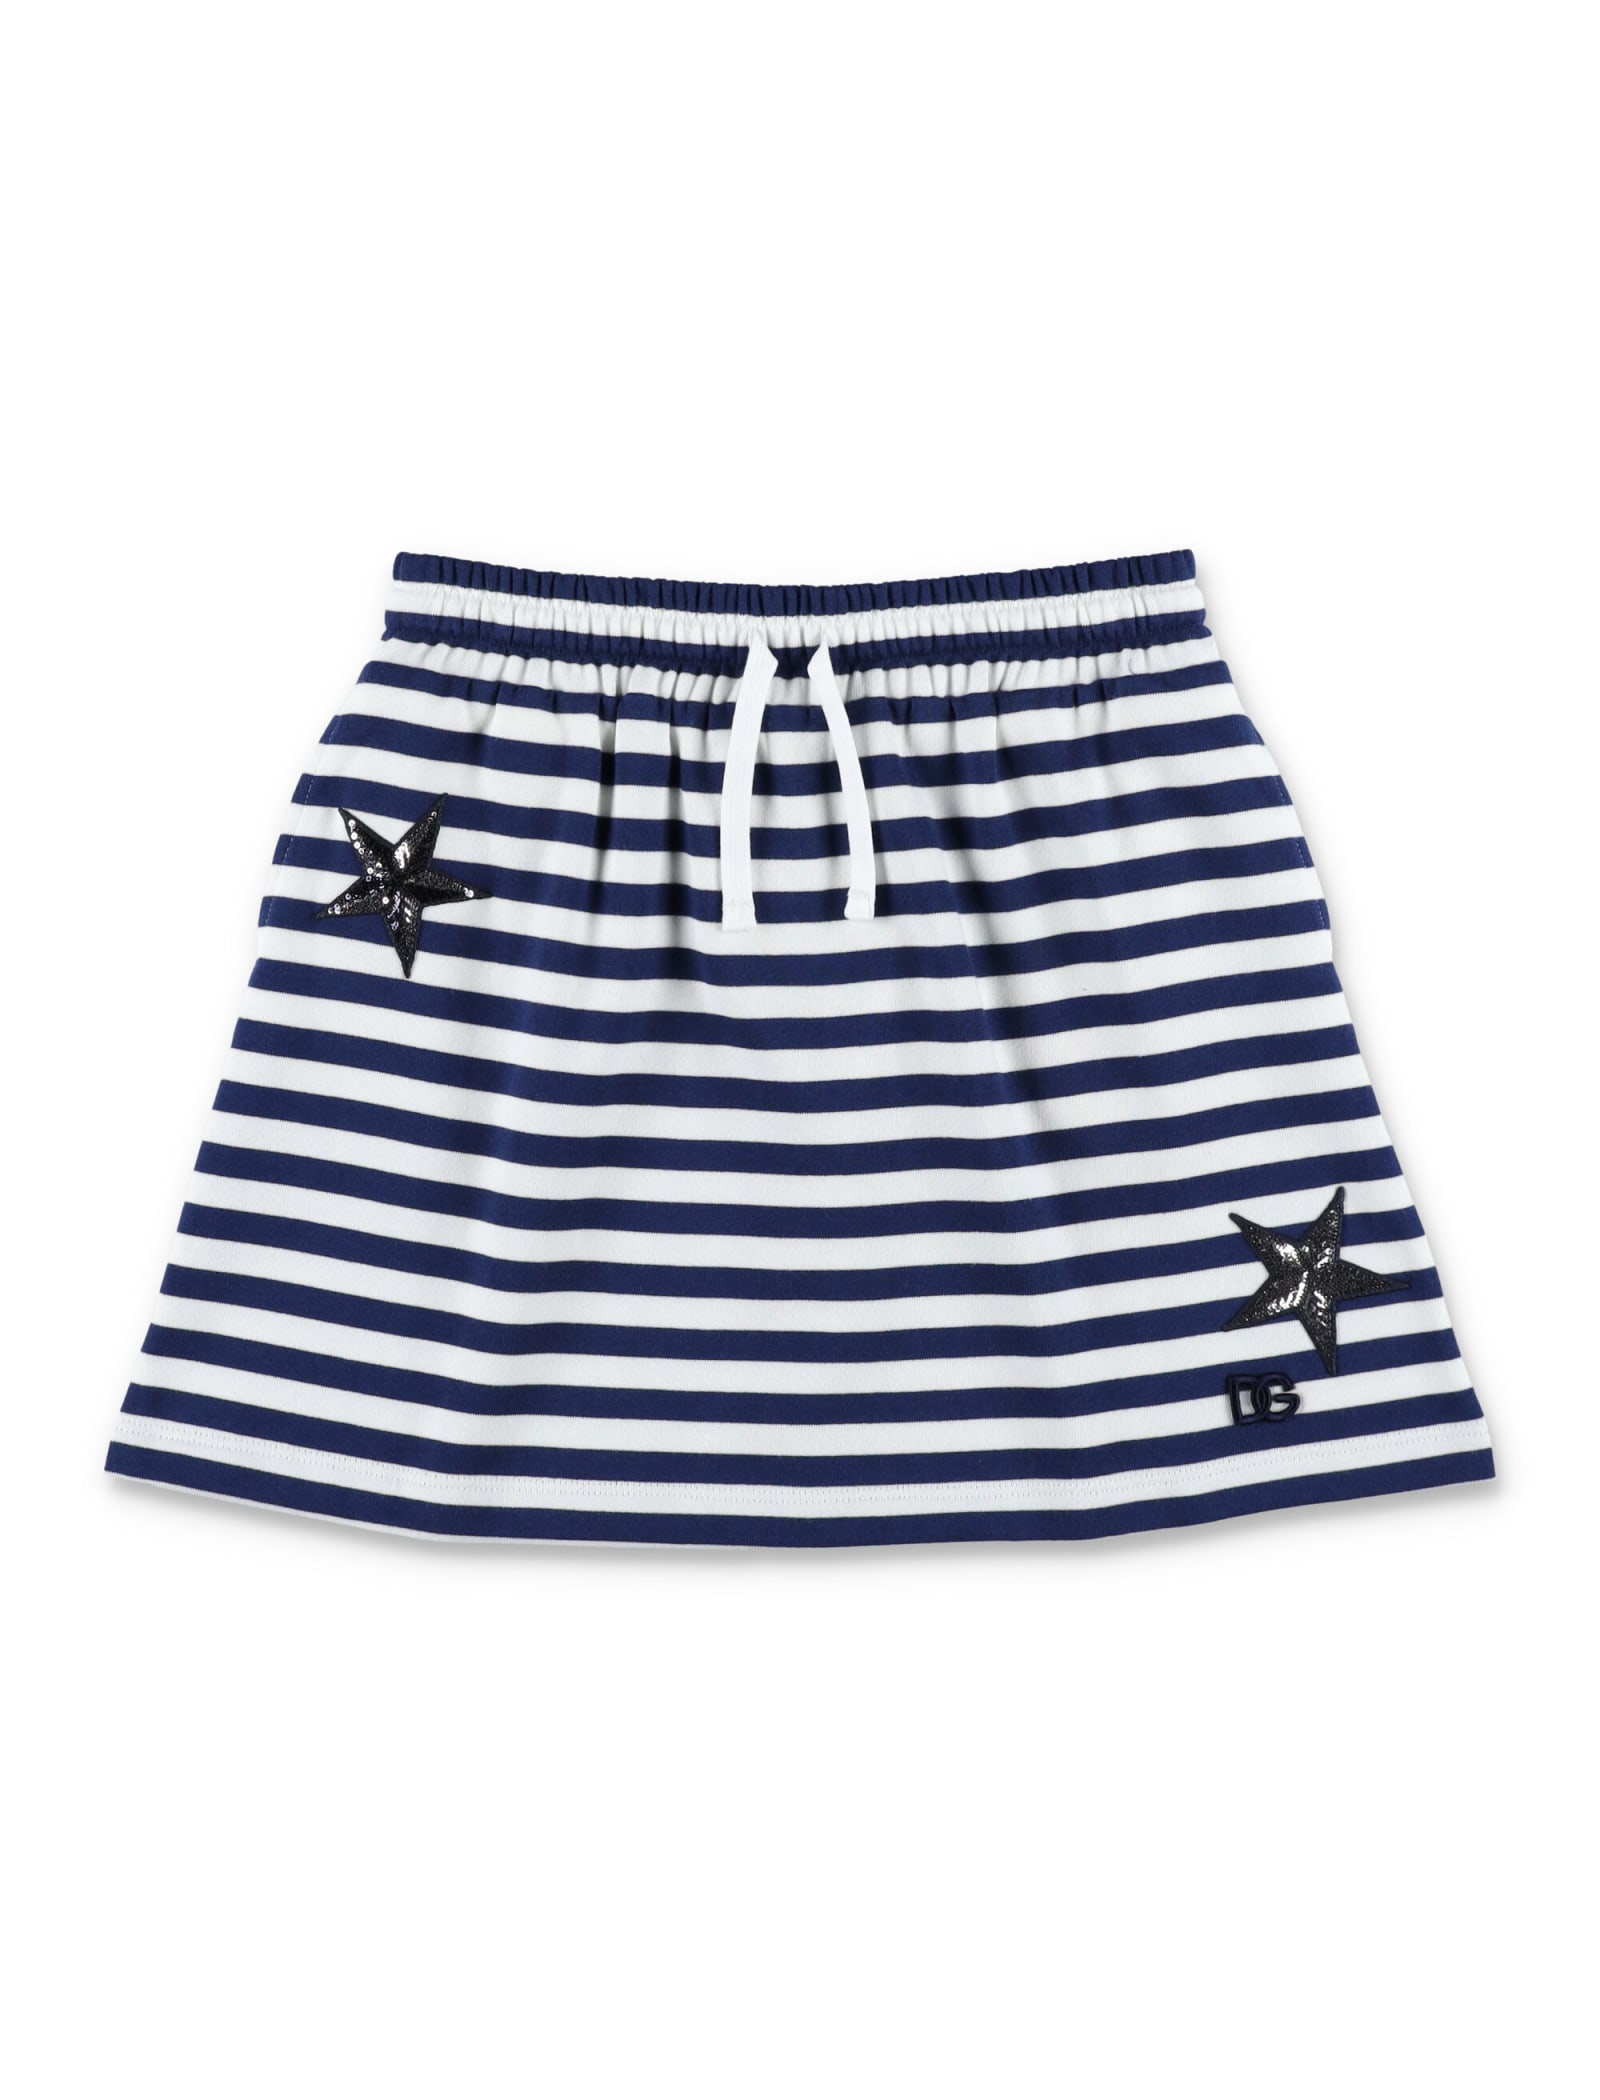 Dolce & Gabbana Striped Mini Skirt